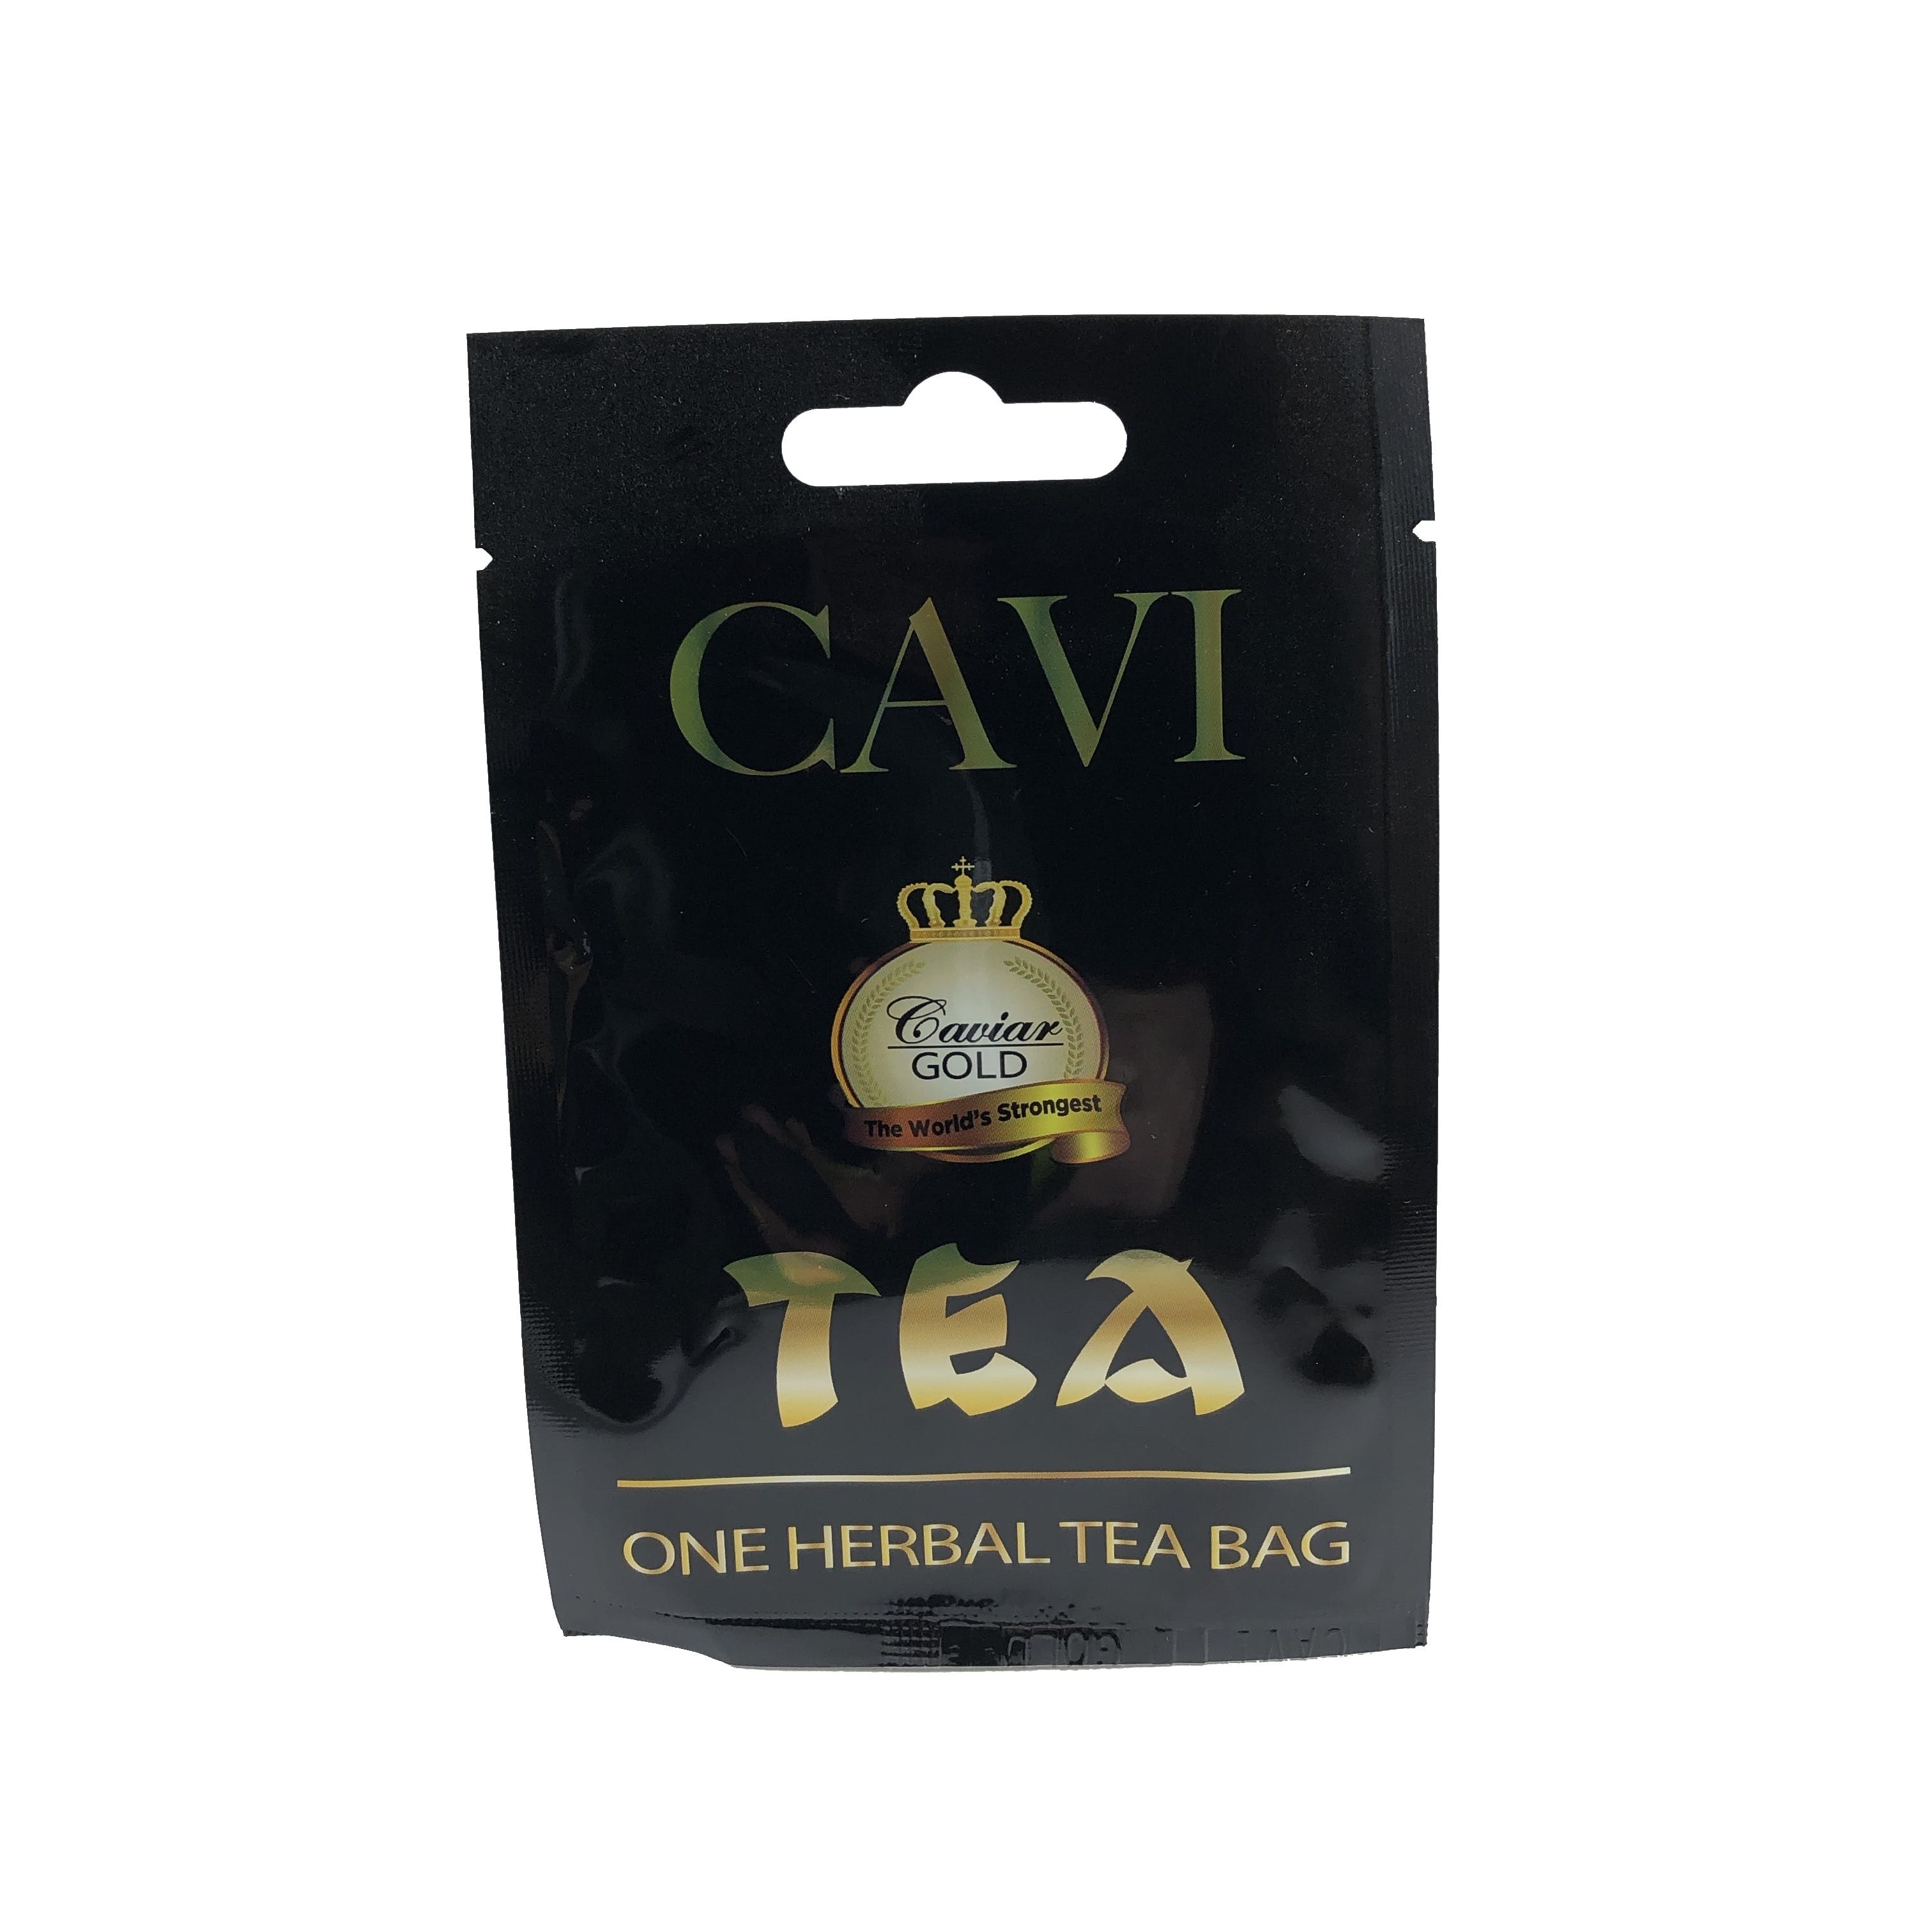 CBD Tea Bag by CAVI